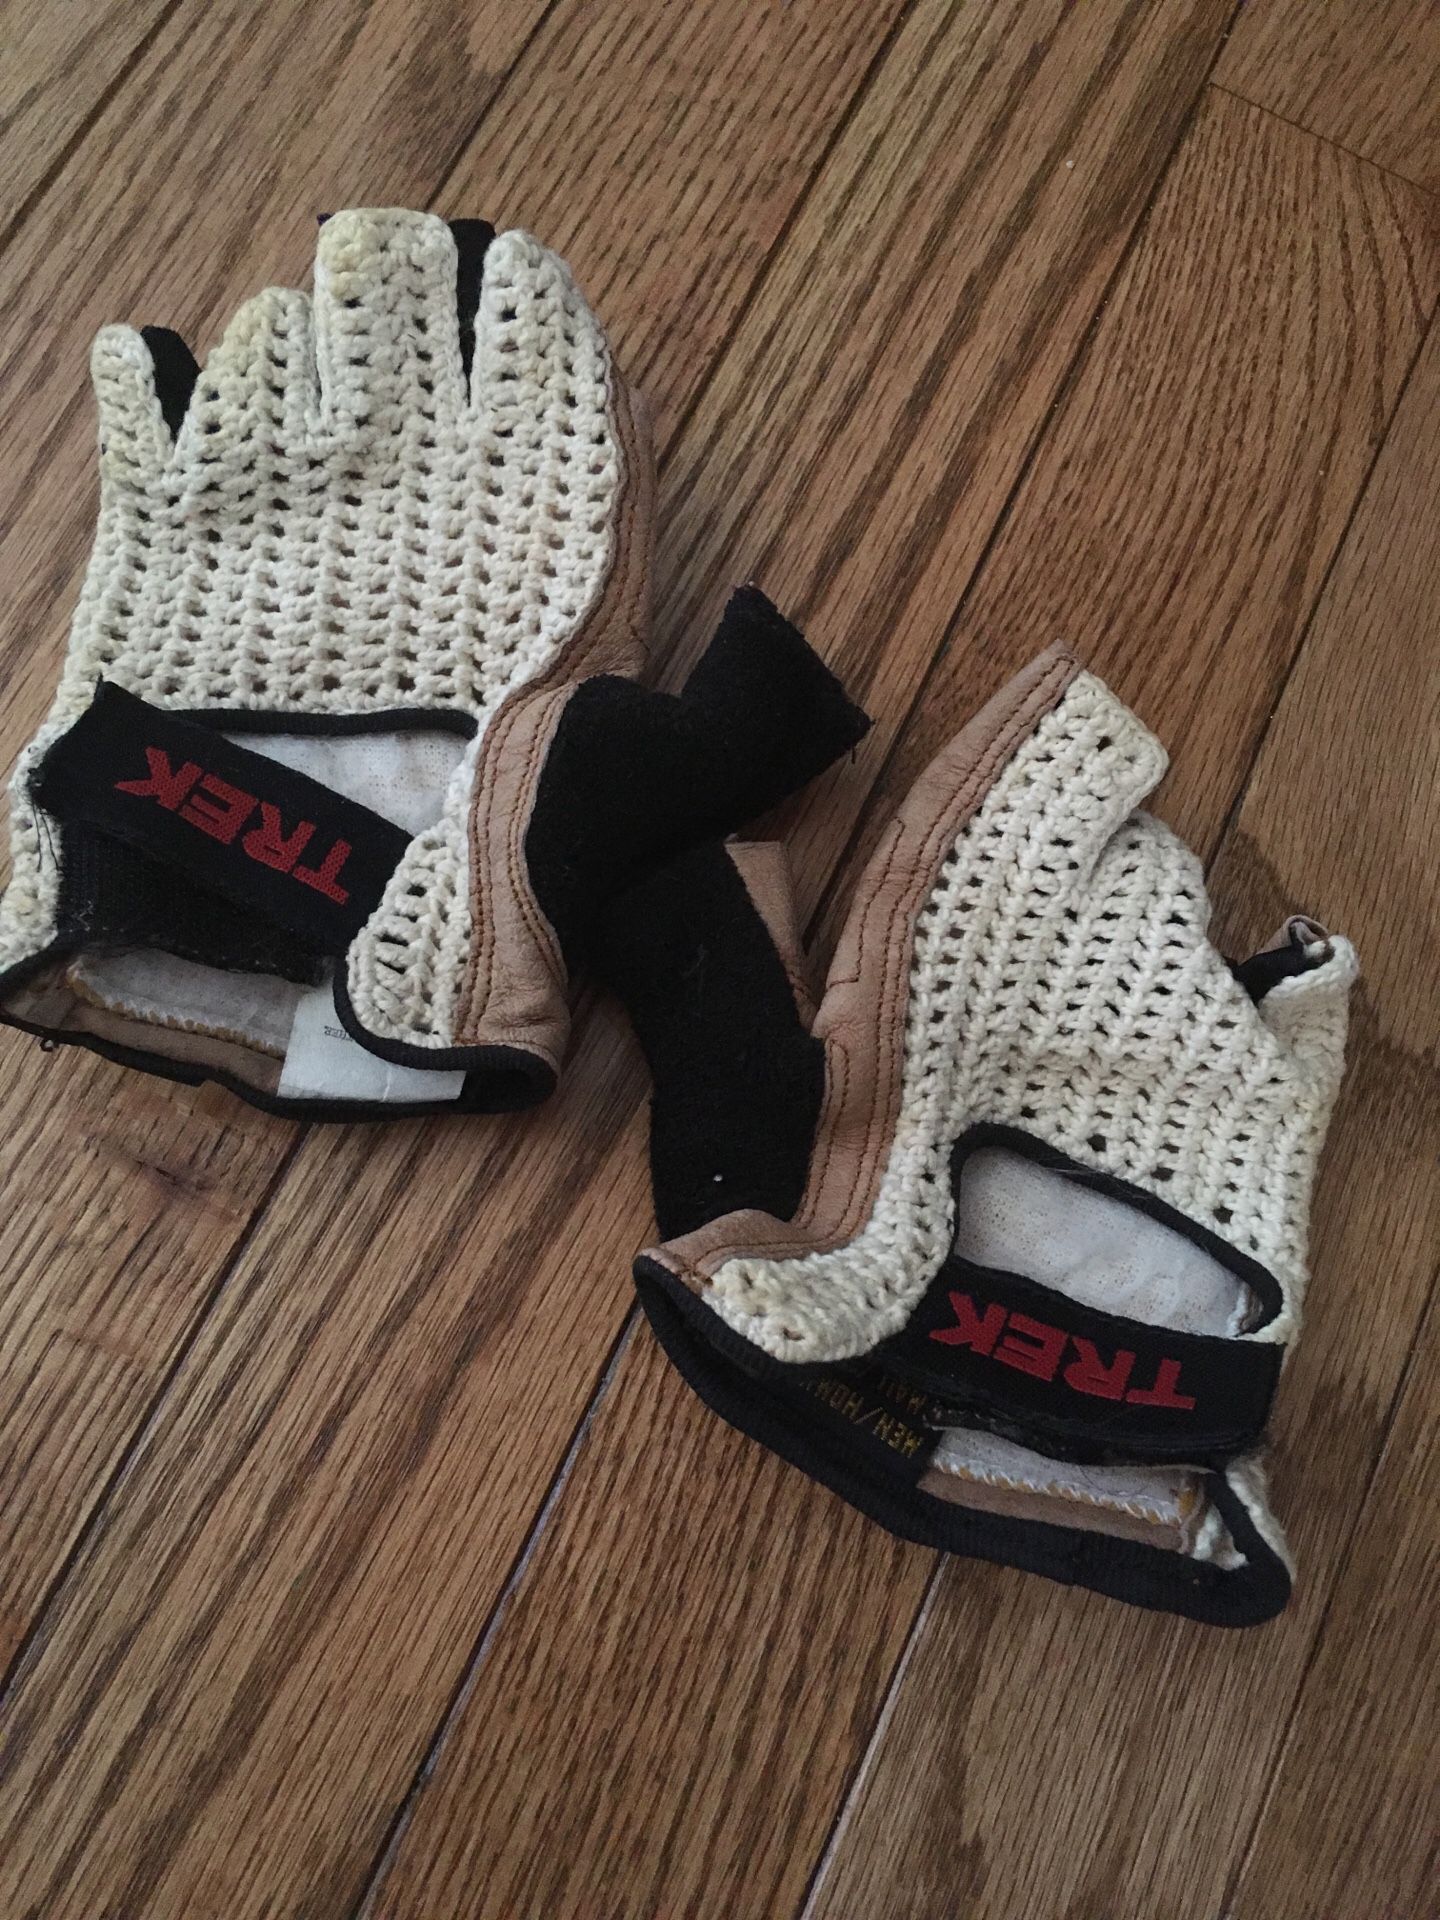 Trek sports/bicycling gloves